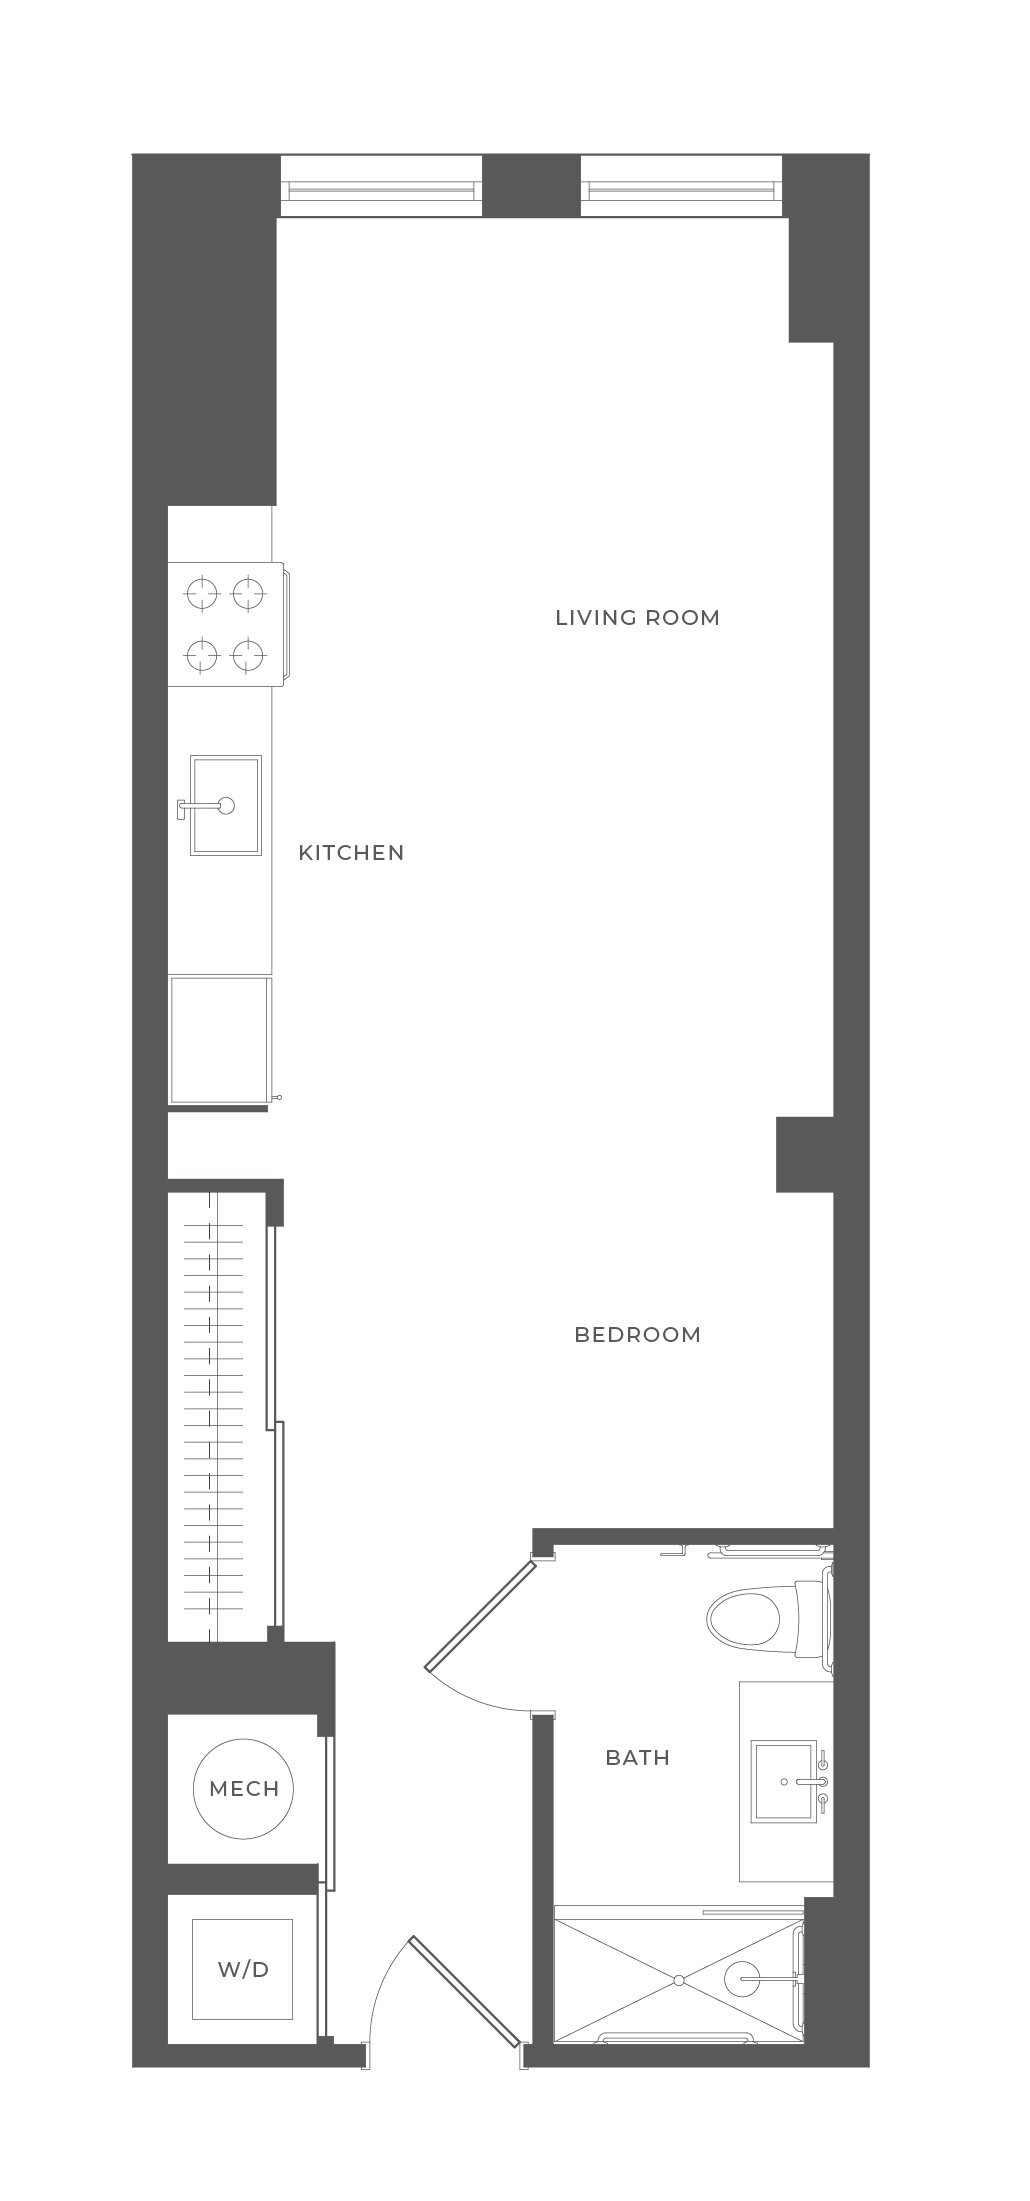 Floorplan of 0523